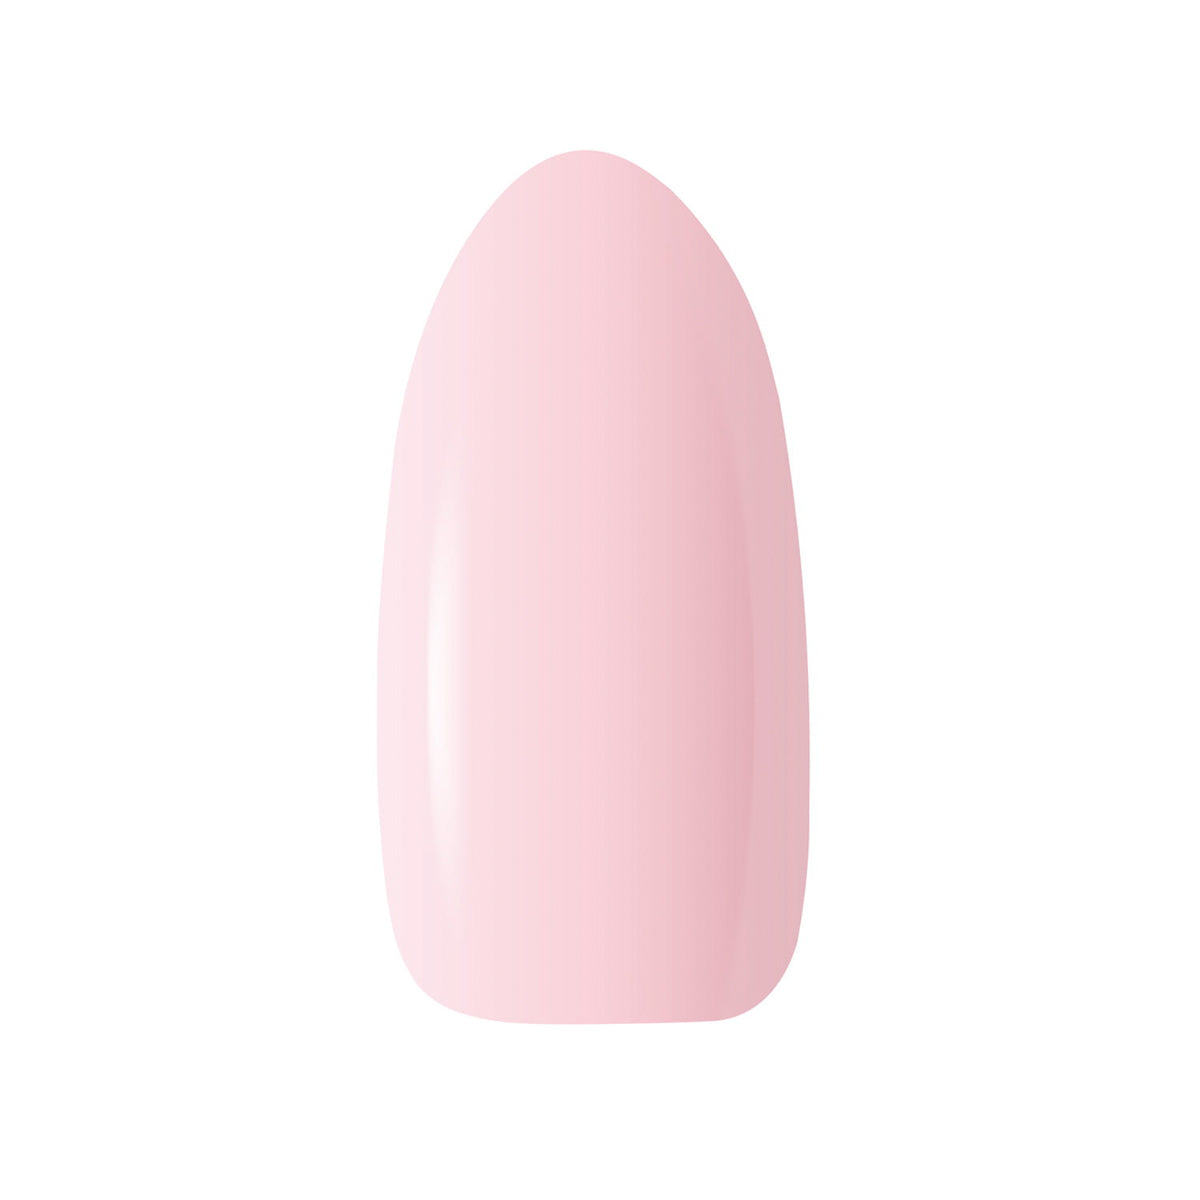 Claresa builder gel Soft & Easy gel milky pink 12g